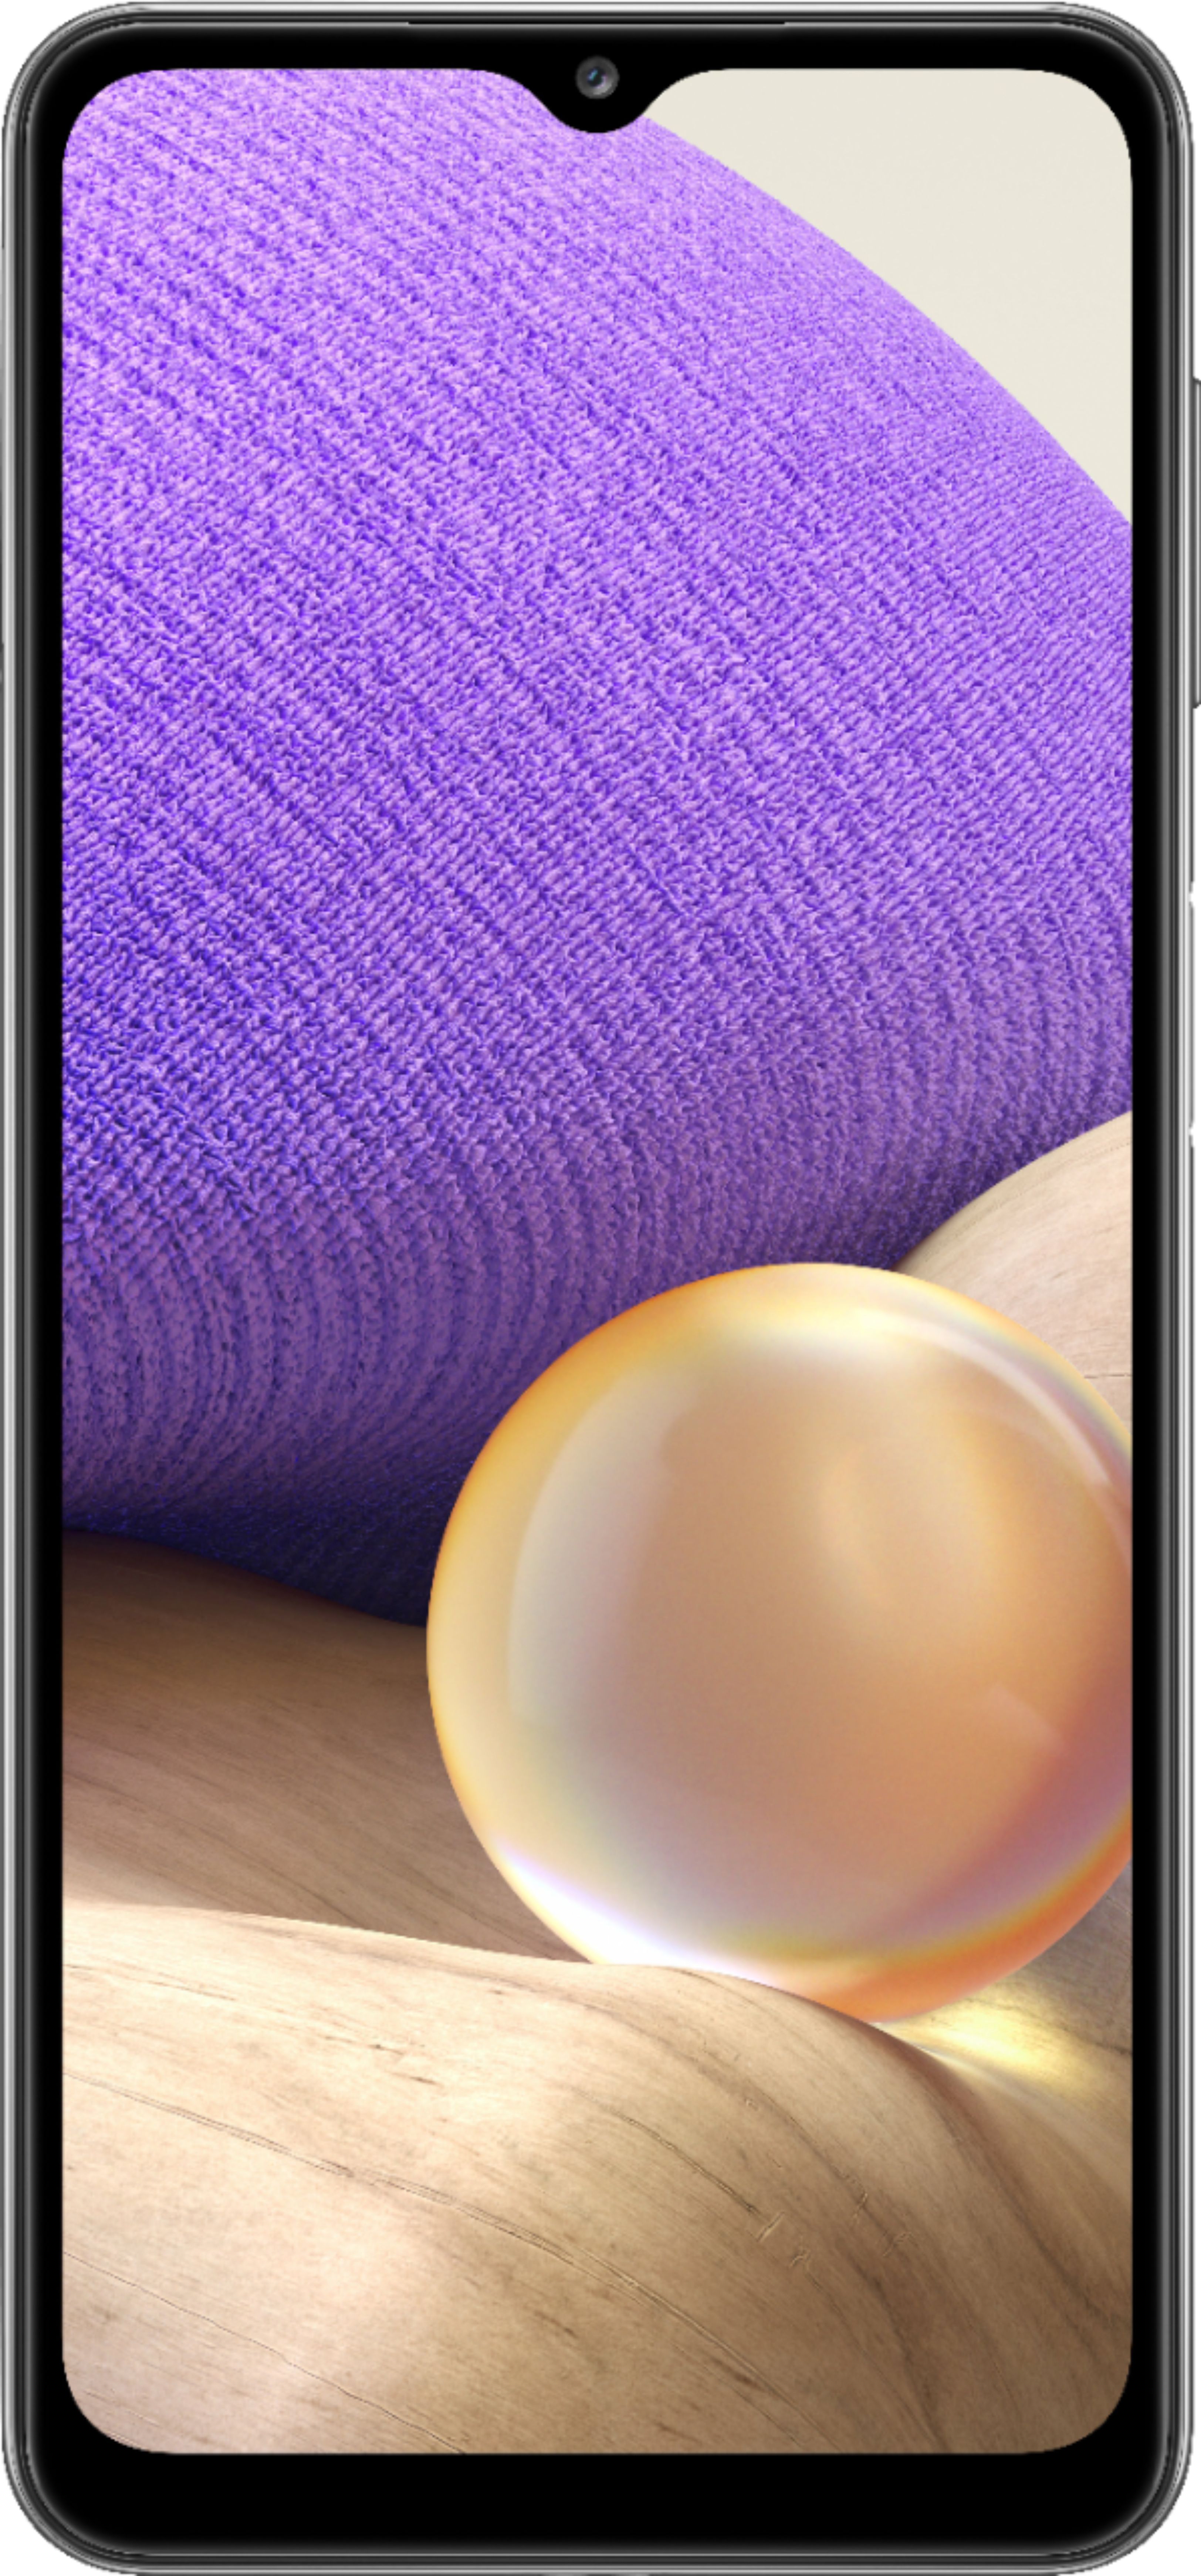 Samsung Galaxy A23 5G, 1 color in 64GB